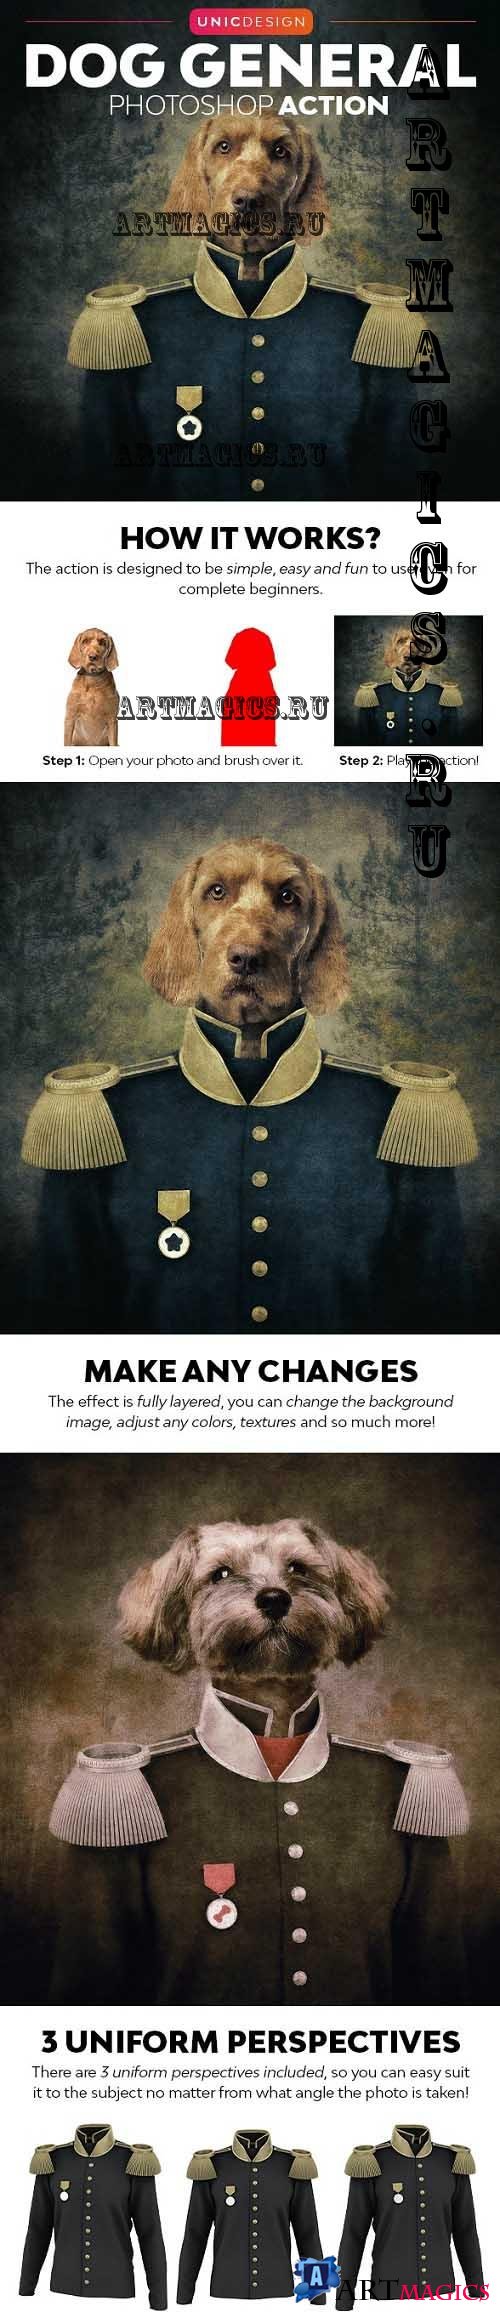 Dog General Photoshop Action - 37233493